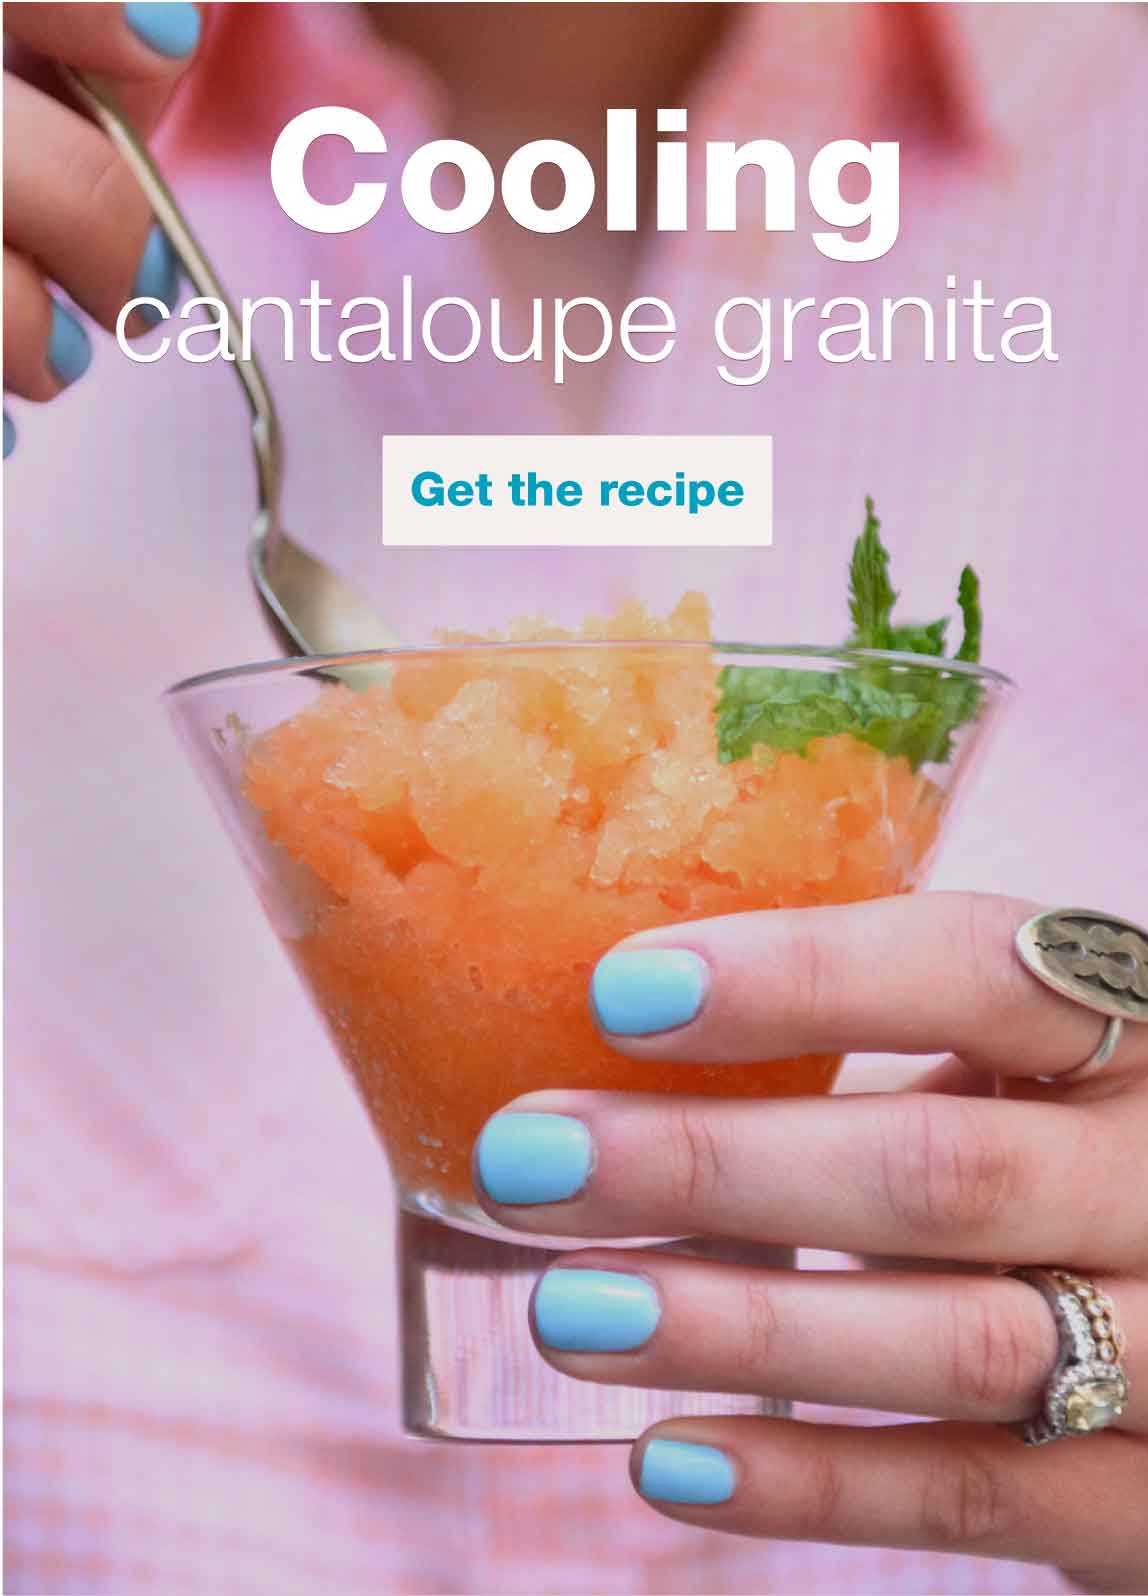 Cooling cantaloupe granita. Get the recipe.